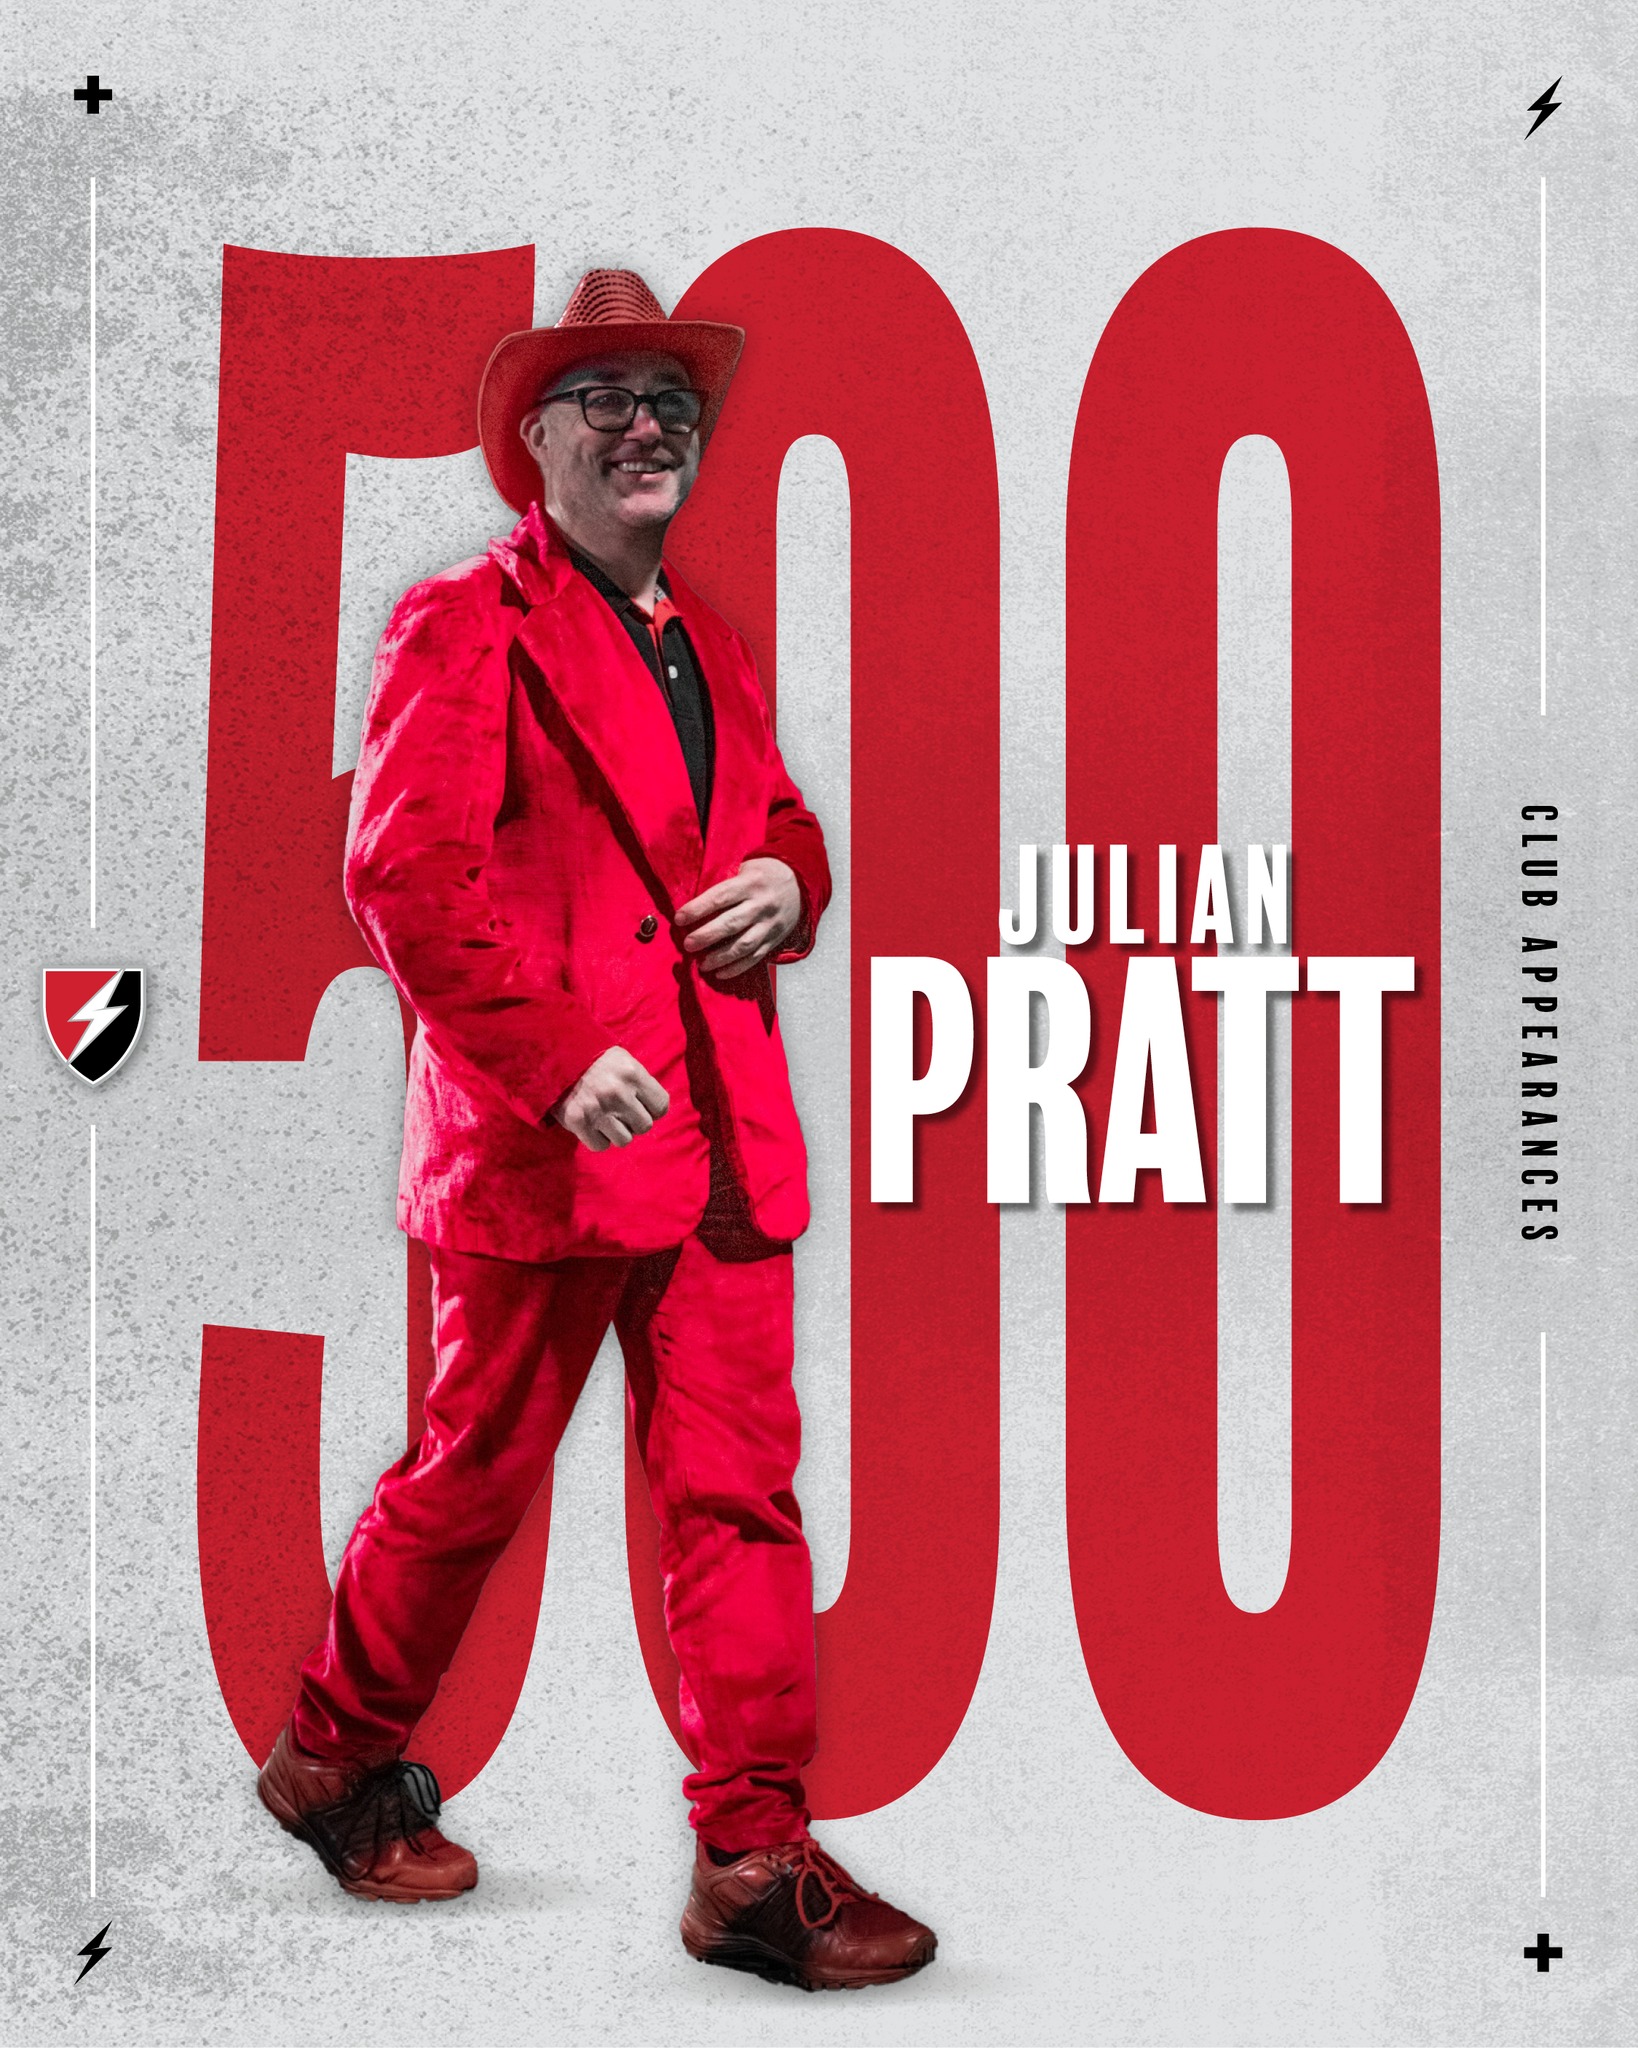 Julian-500-games